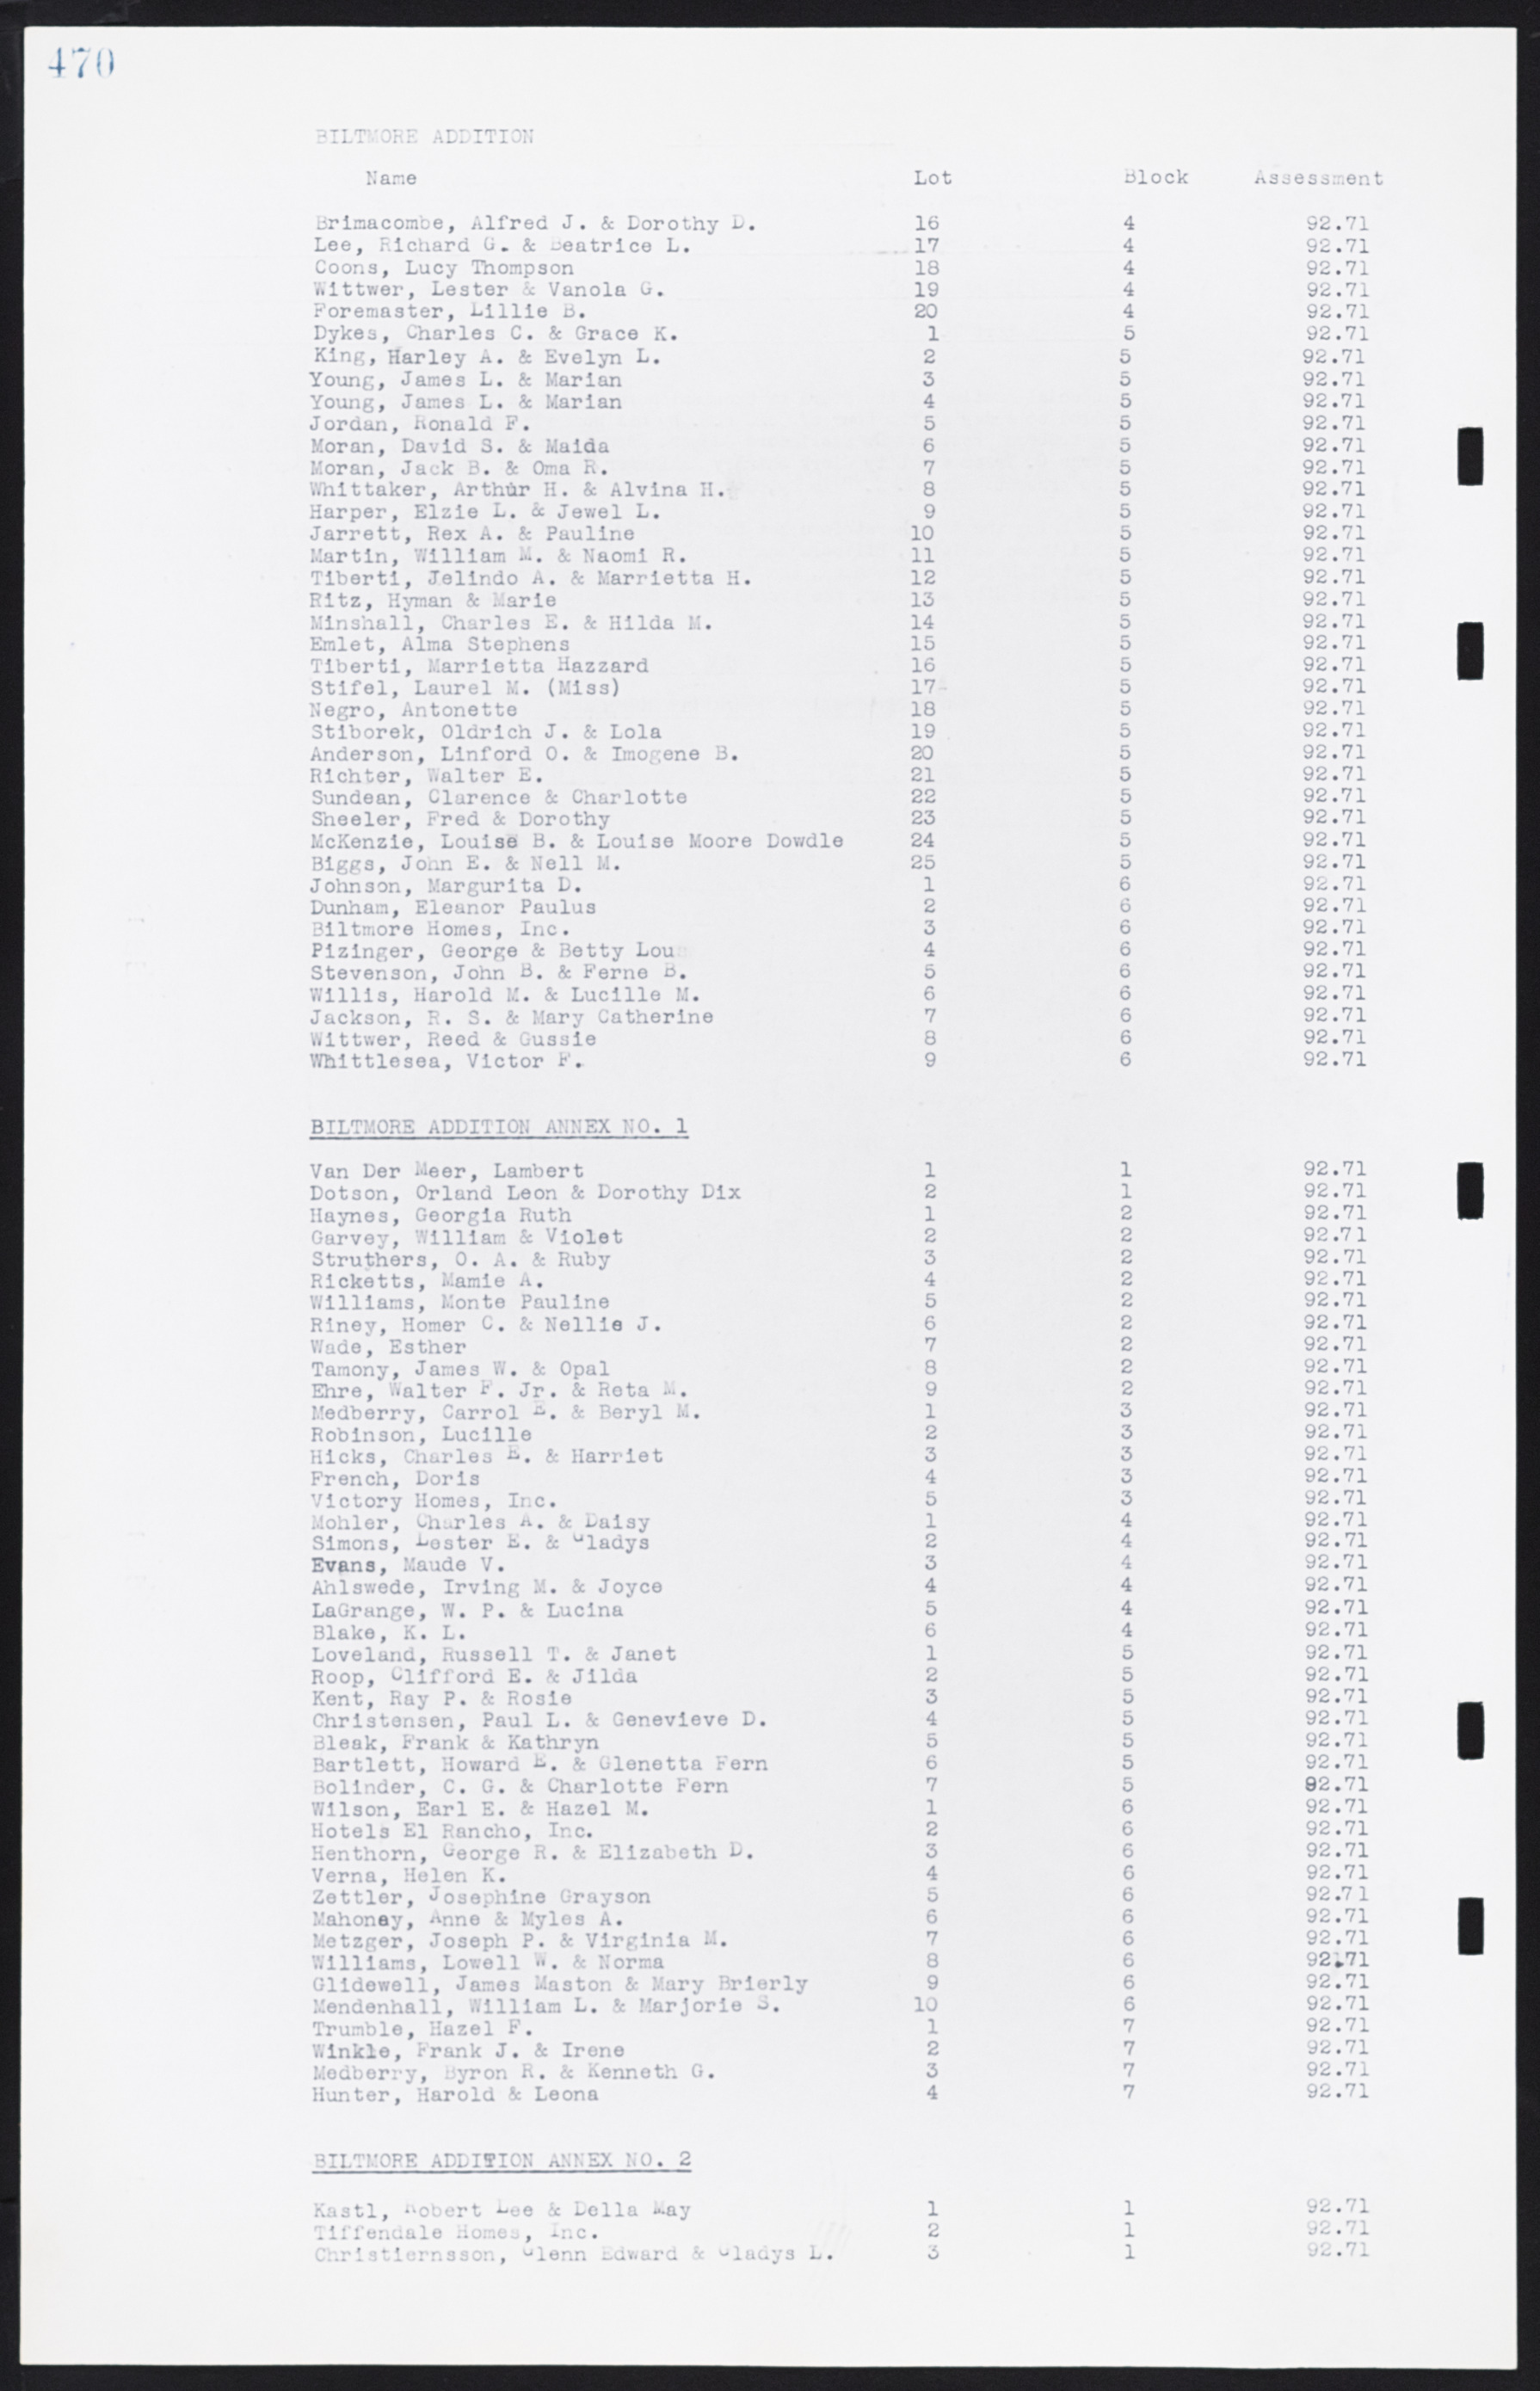 Las Vegas City Commission Minutes, January 7, 1947 to October 26, 1949, lvc000006-502